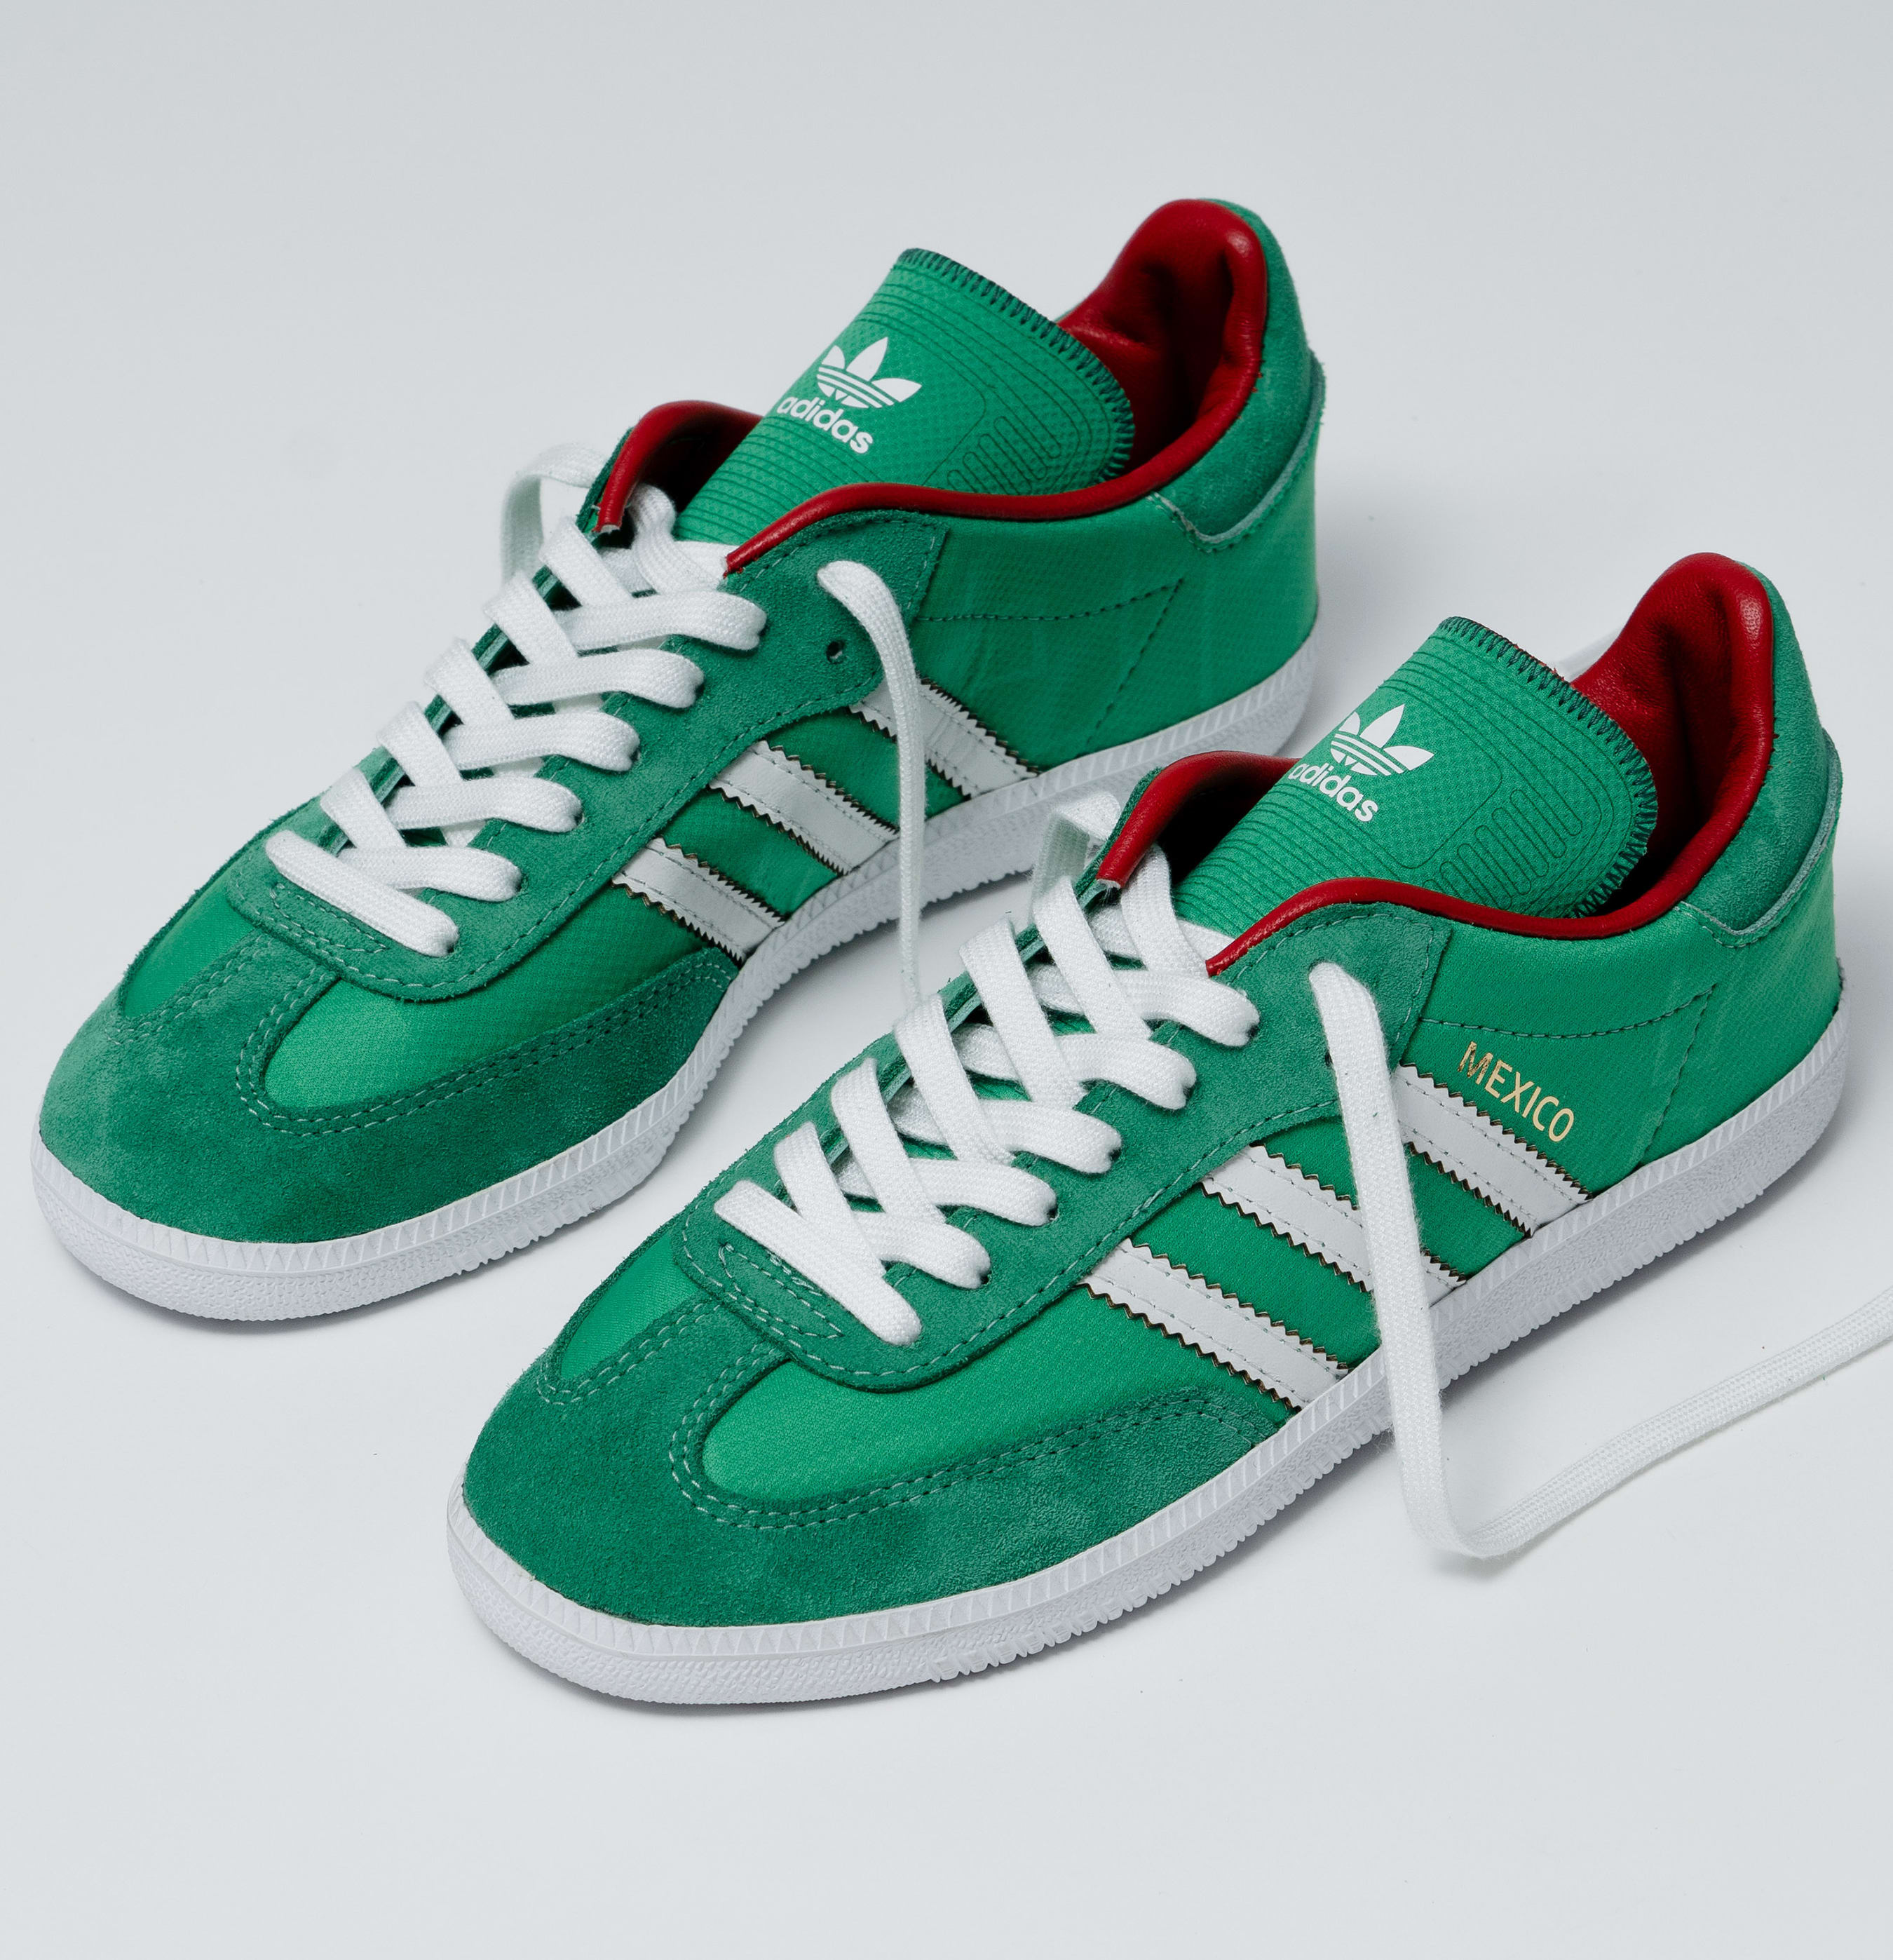 Adidas Samba &#x27;Mash Up&#x27; Collection